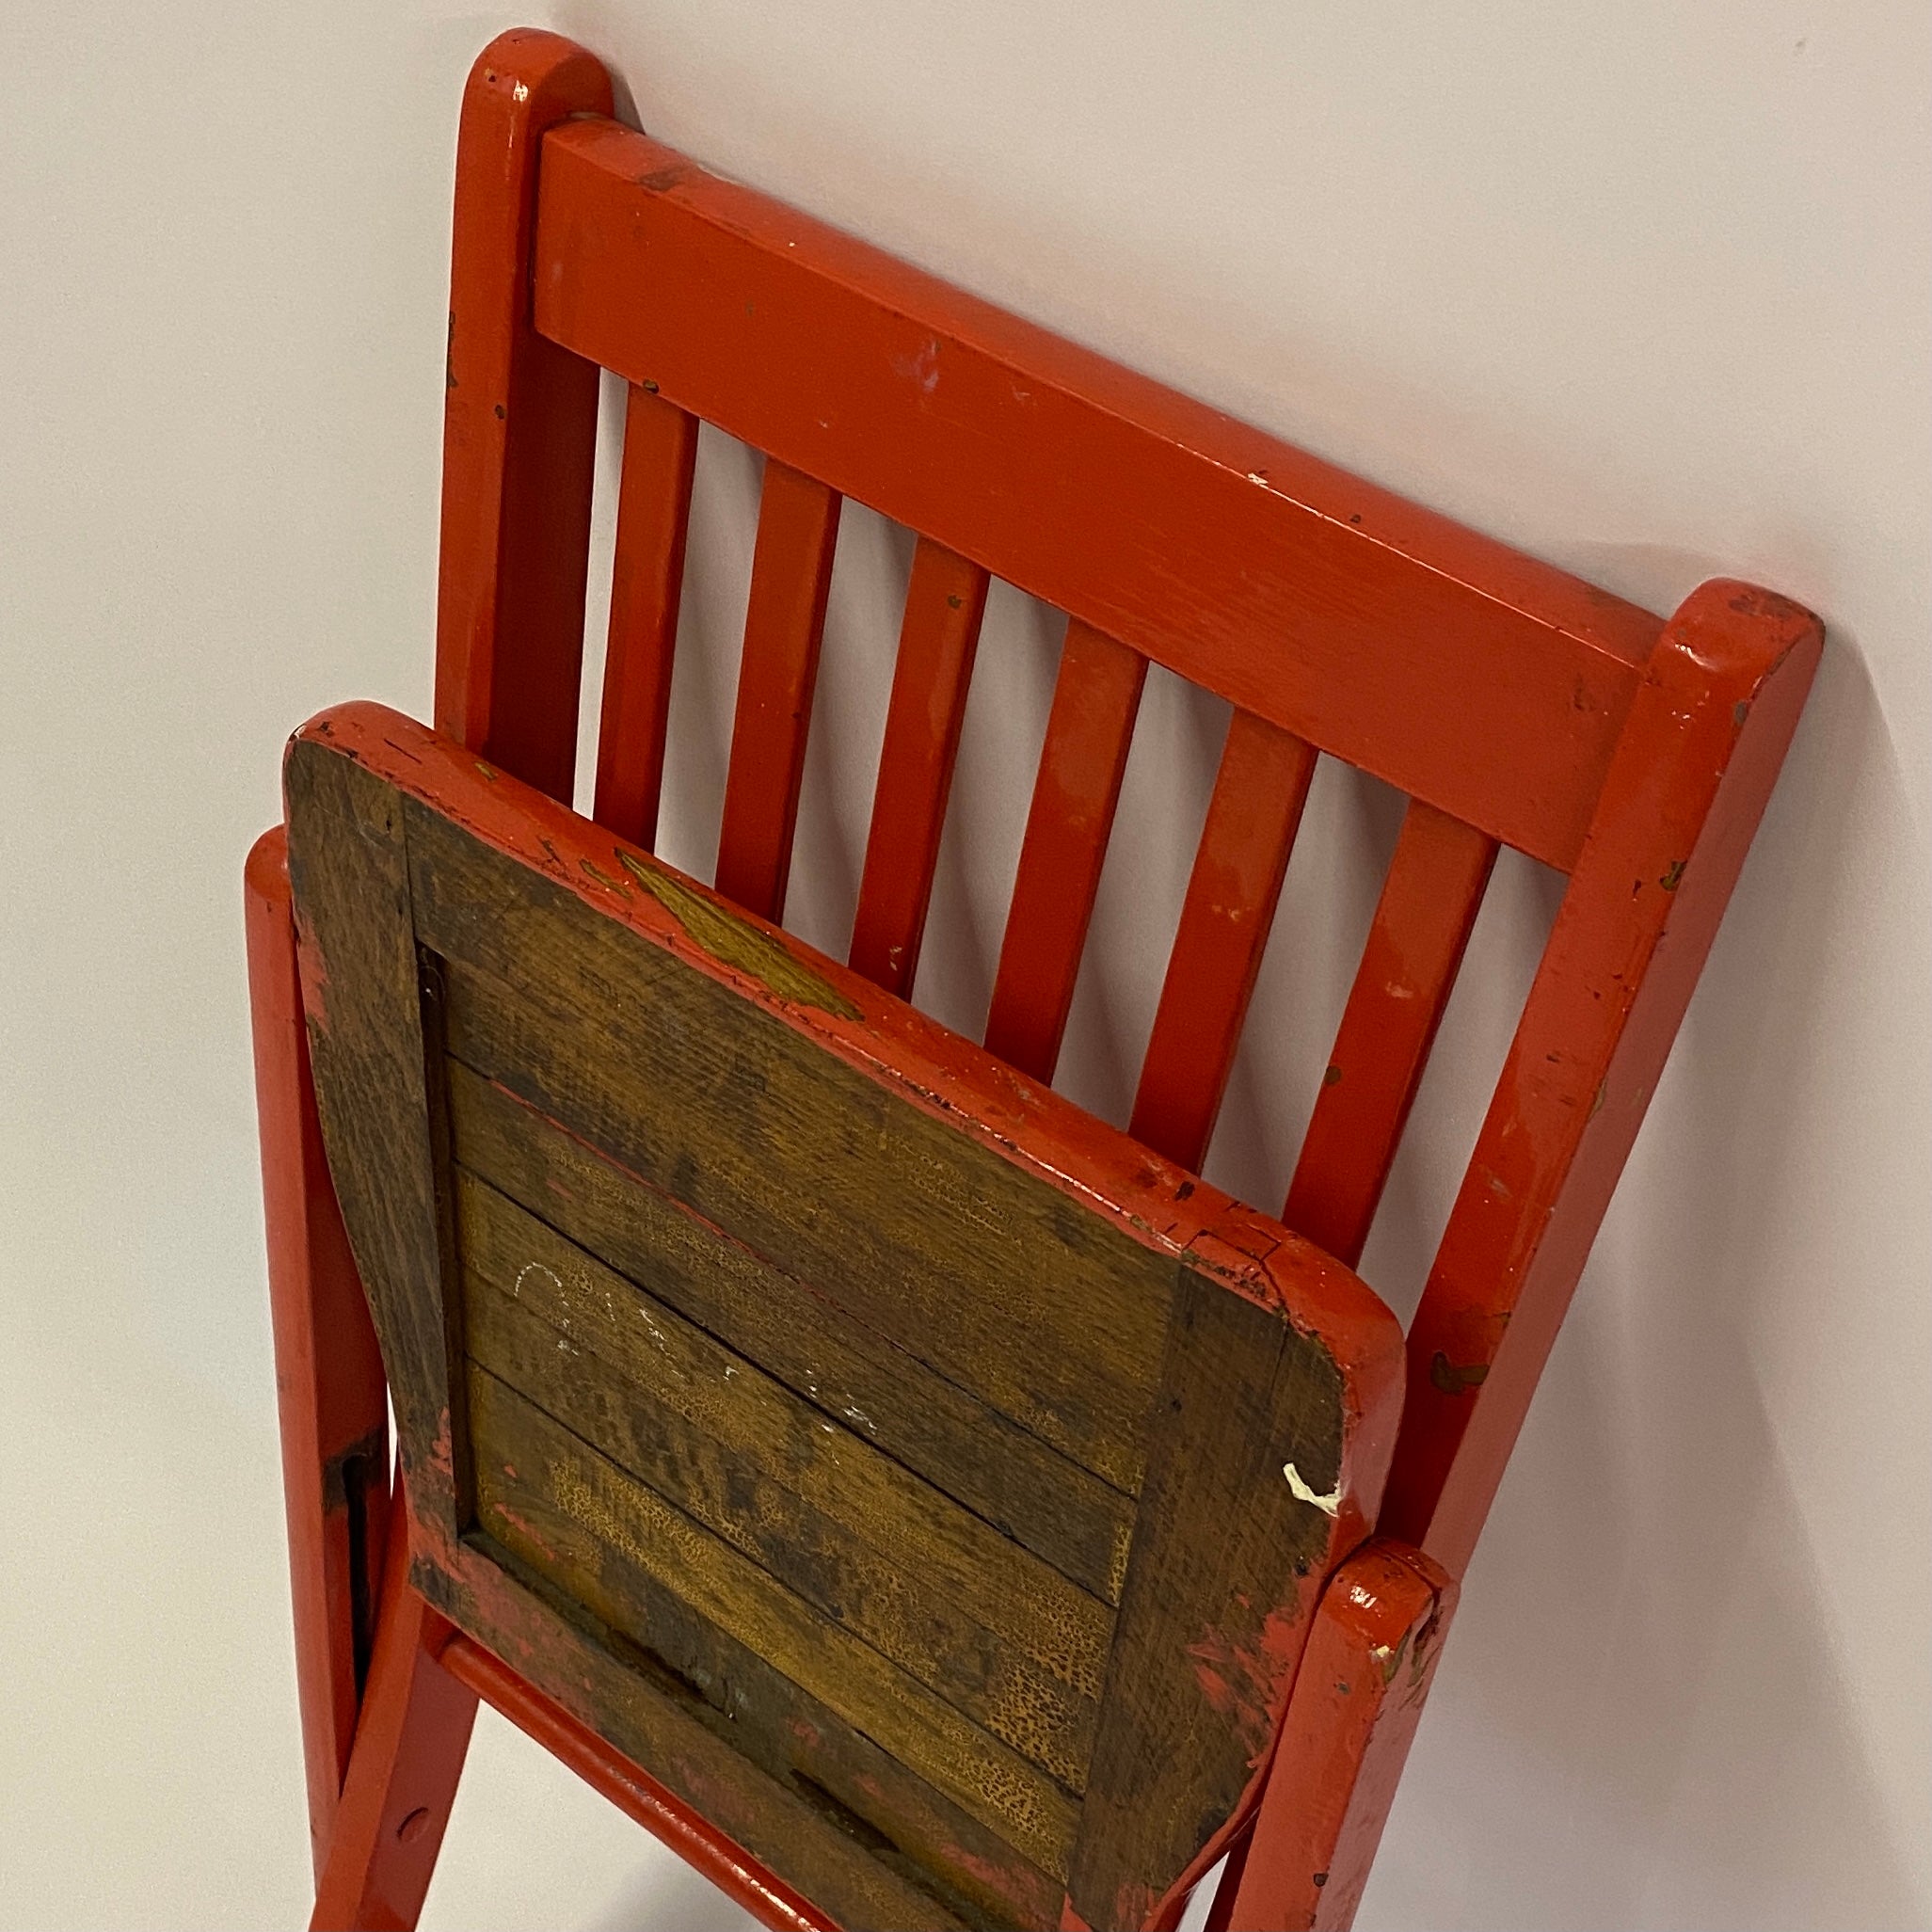 Folden Red Chair